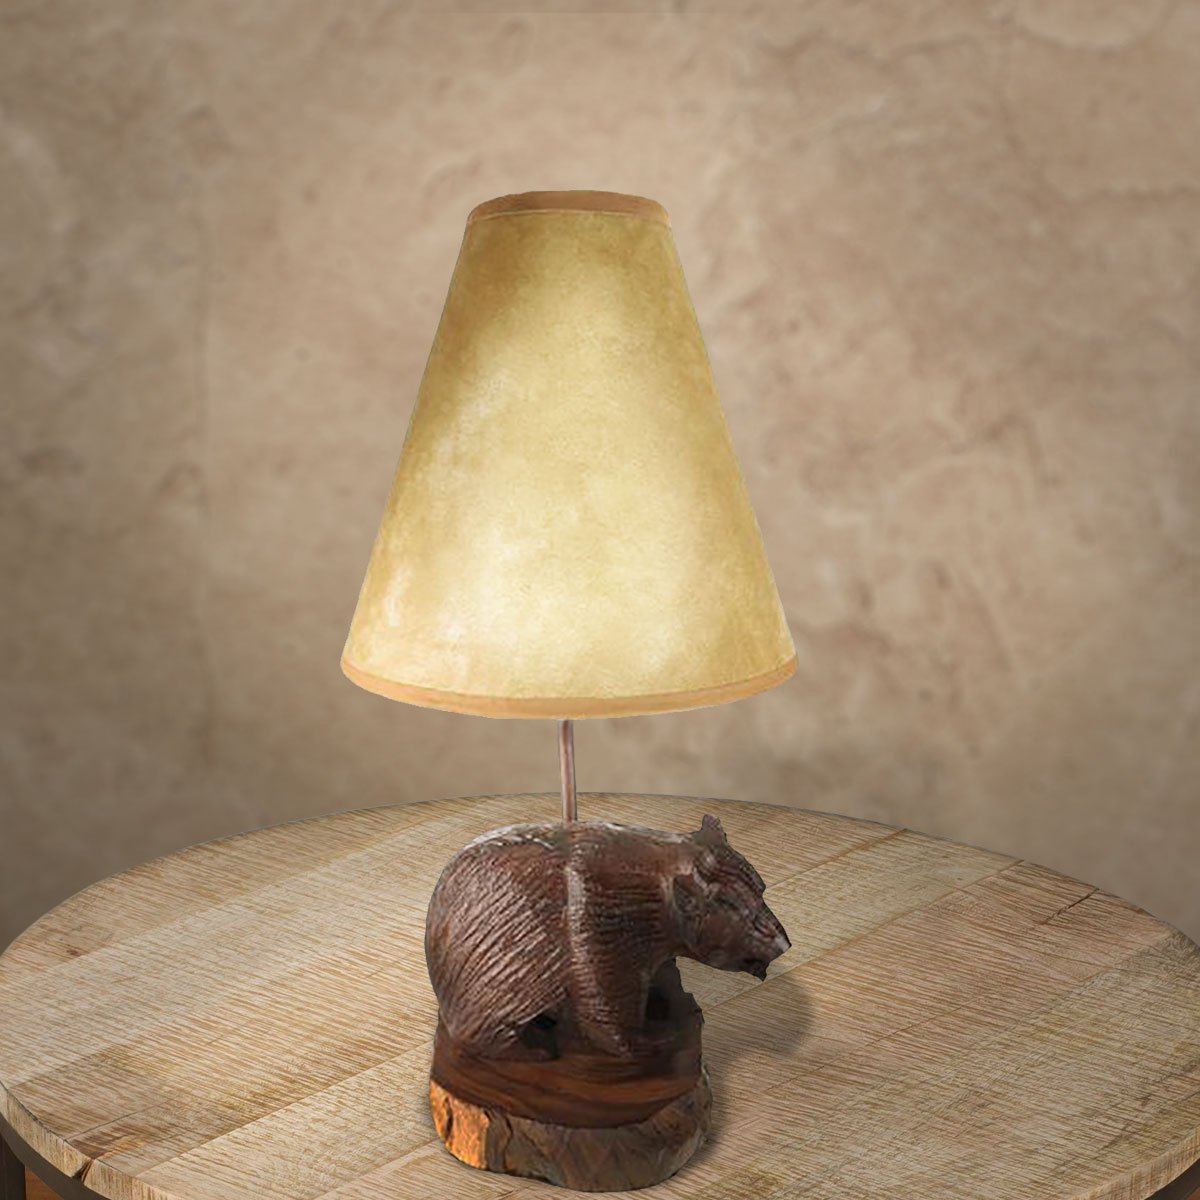 172012 - Bear with Fish Ironwood Vanity Lamp with Shade